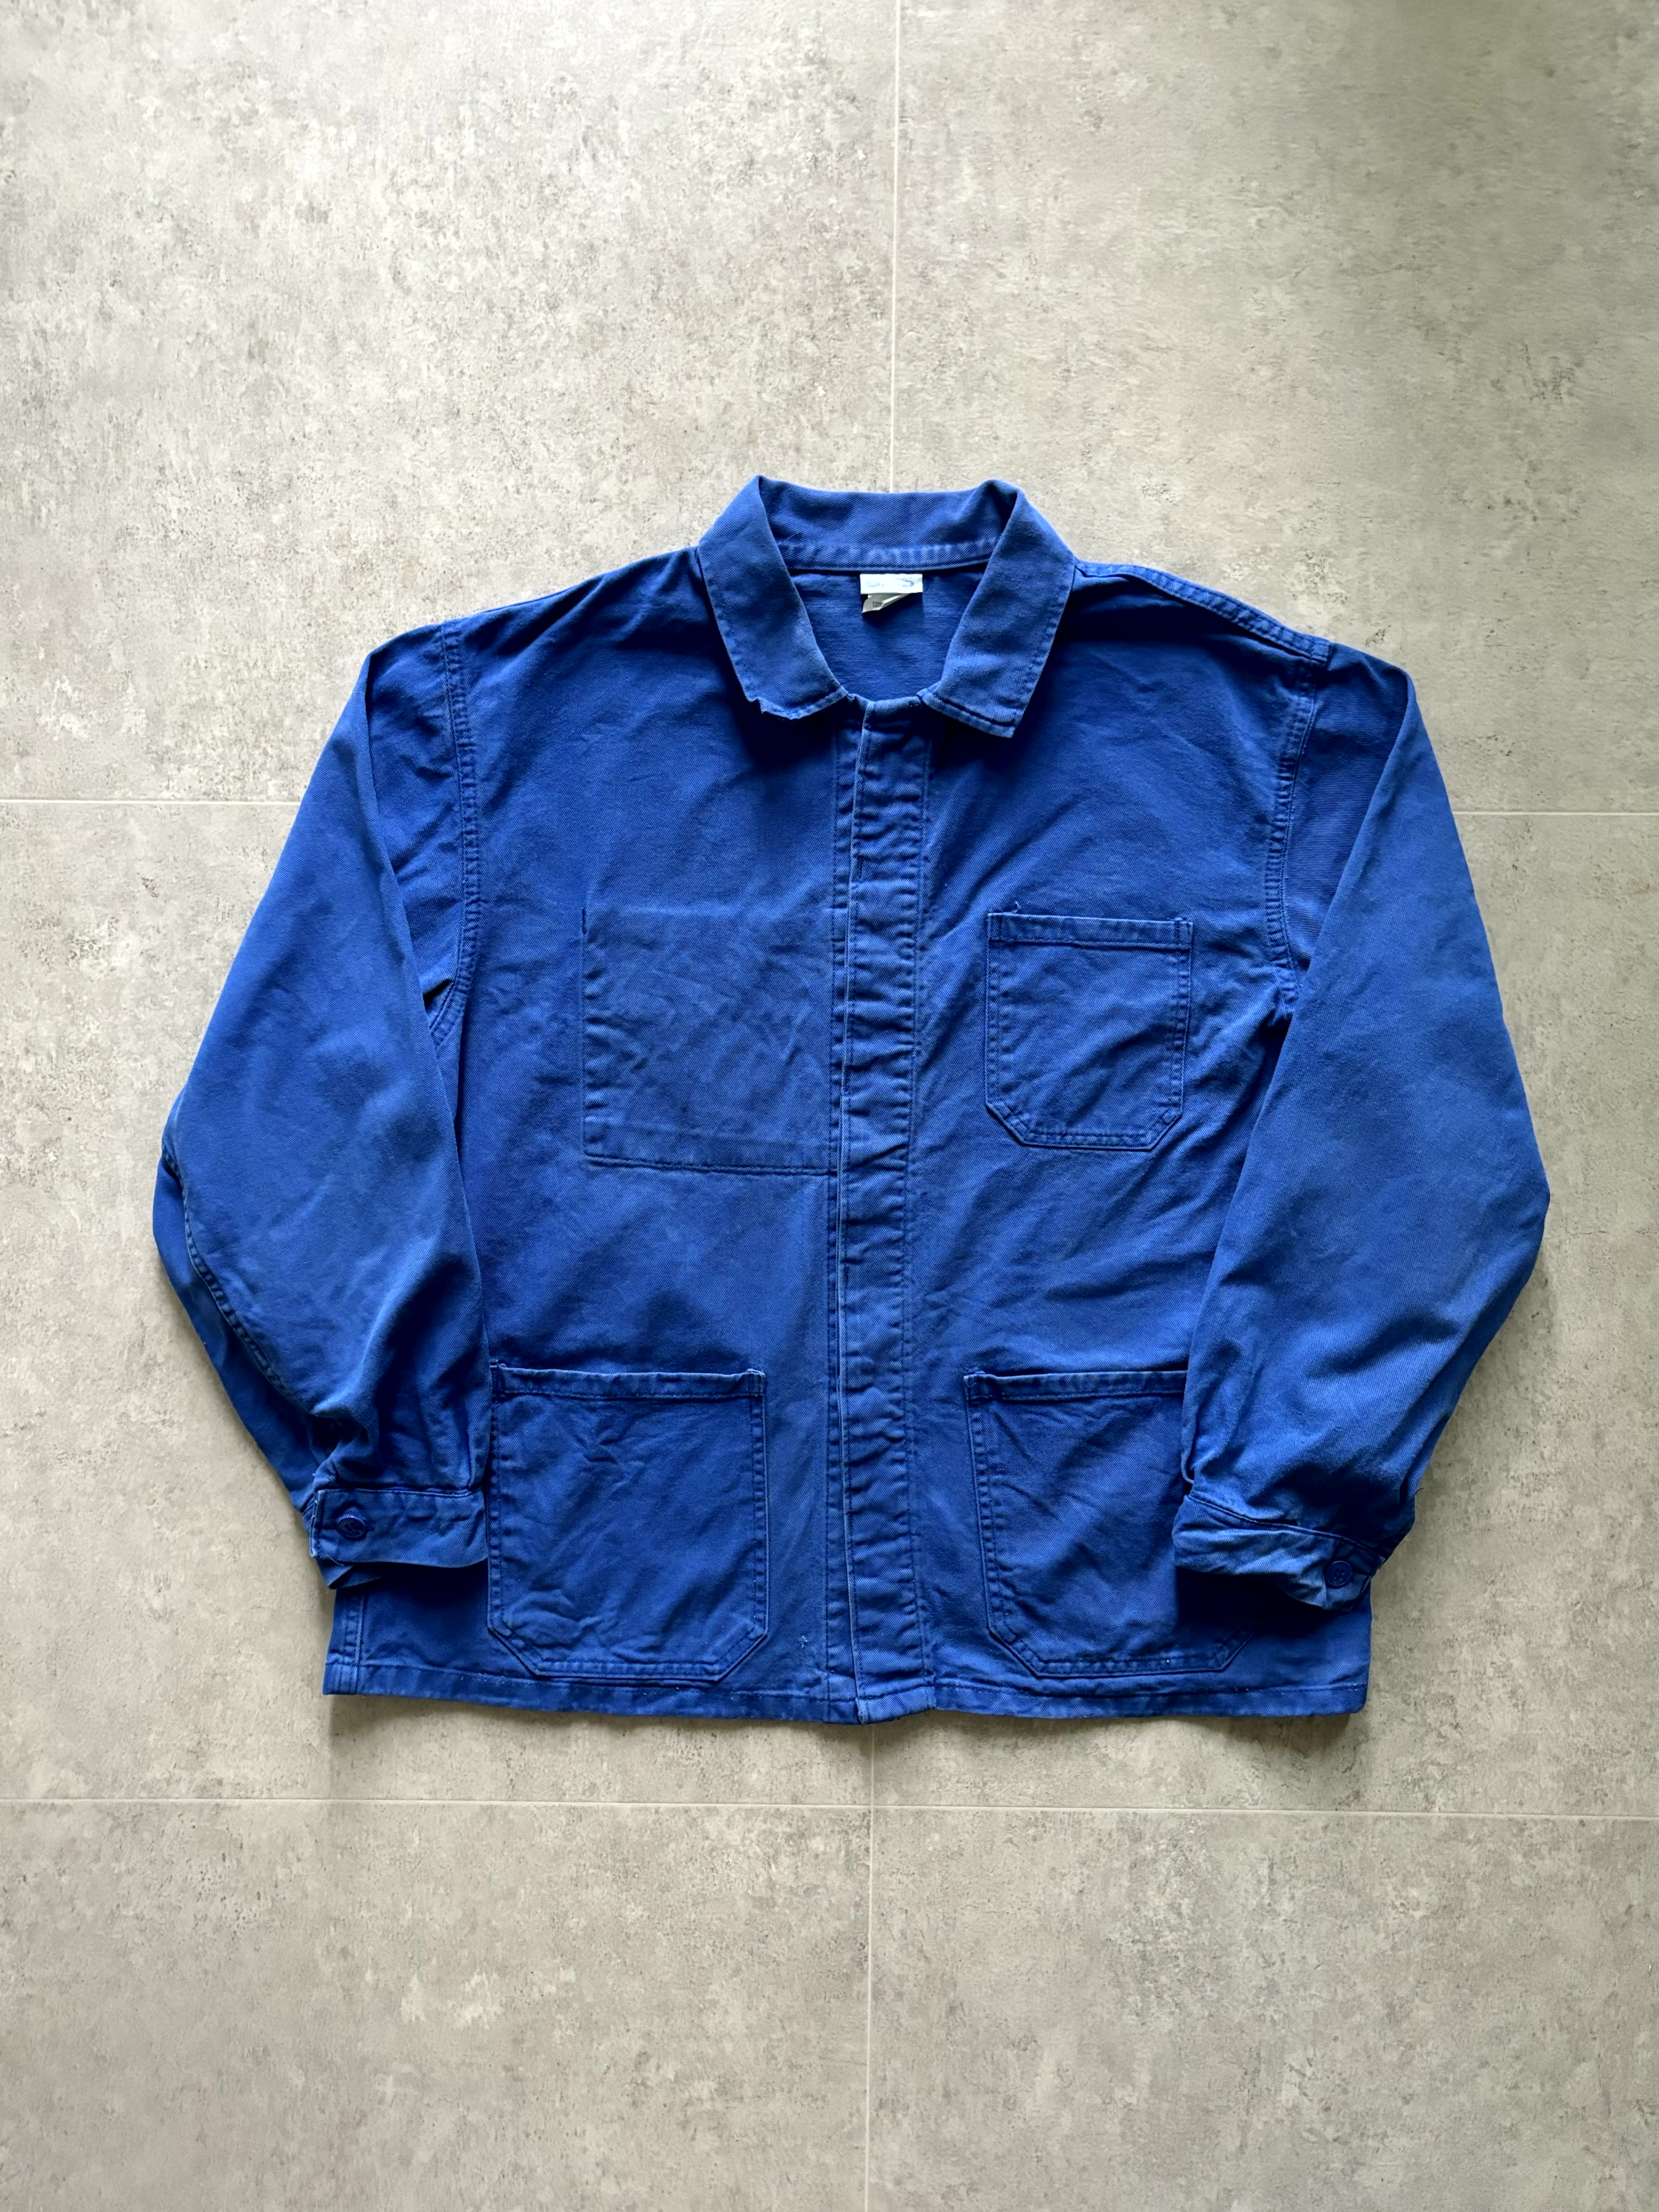 VTG French Work Jacket ~105 Size - 체리피커